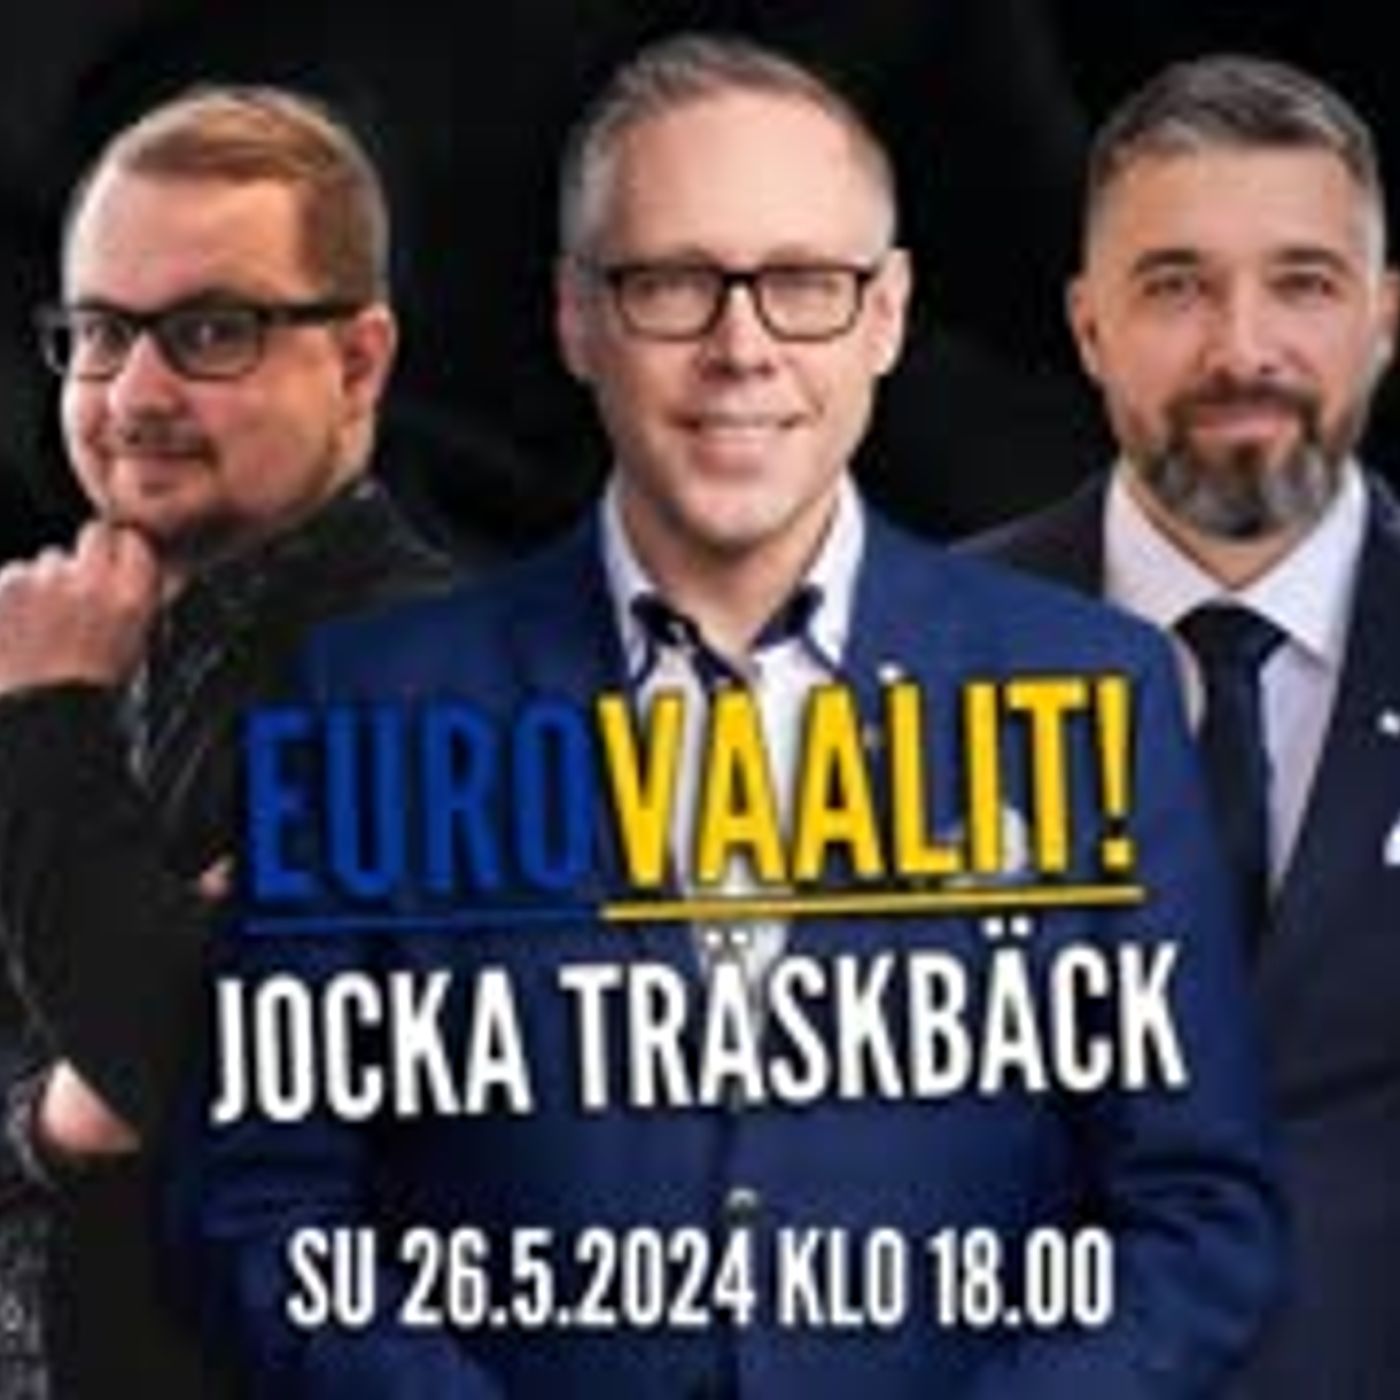 #59 - Eurovaalit! Vieraana Jocka Träskbäck